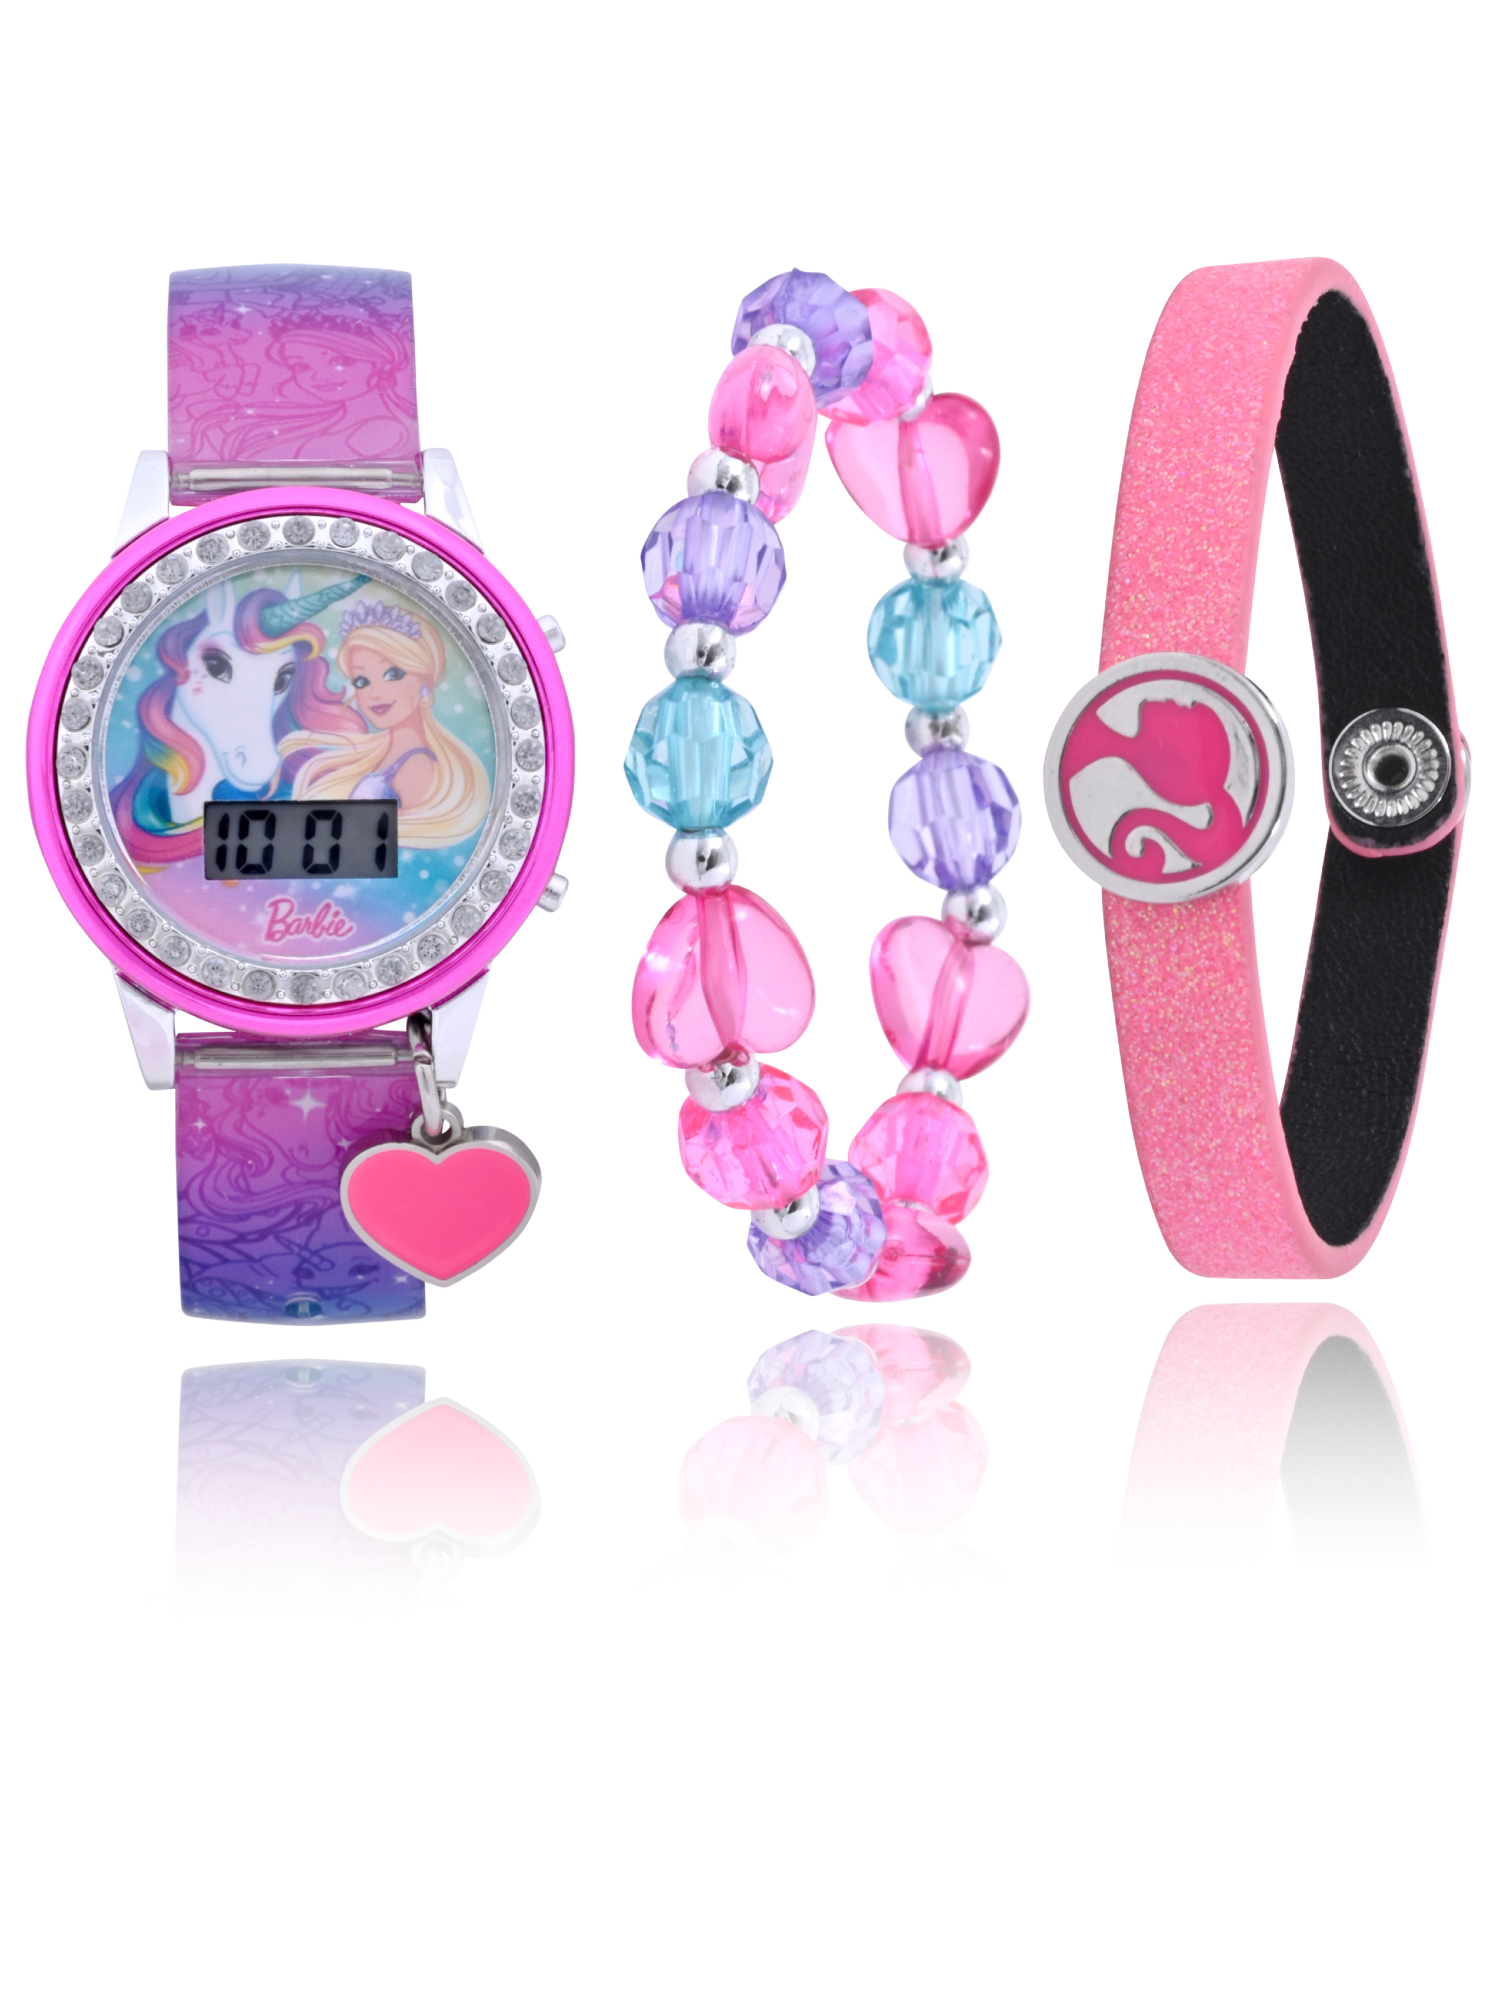 Mattel Barbie Girls Flashing LCD Pink Ombre Silicone Watch & Matching Bracelet 3 Piece Set - image 1 of 6